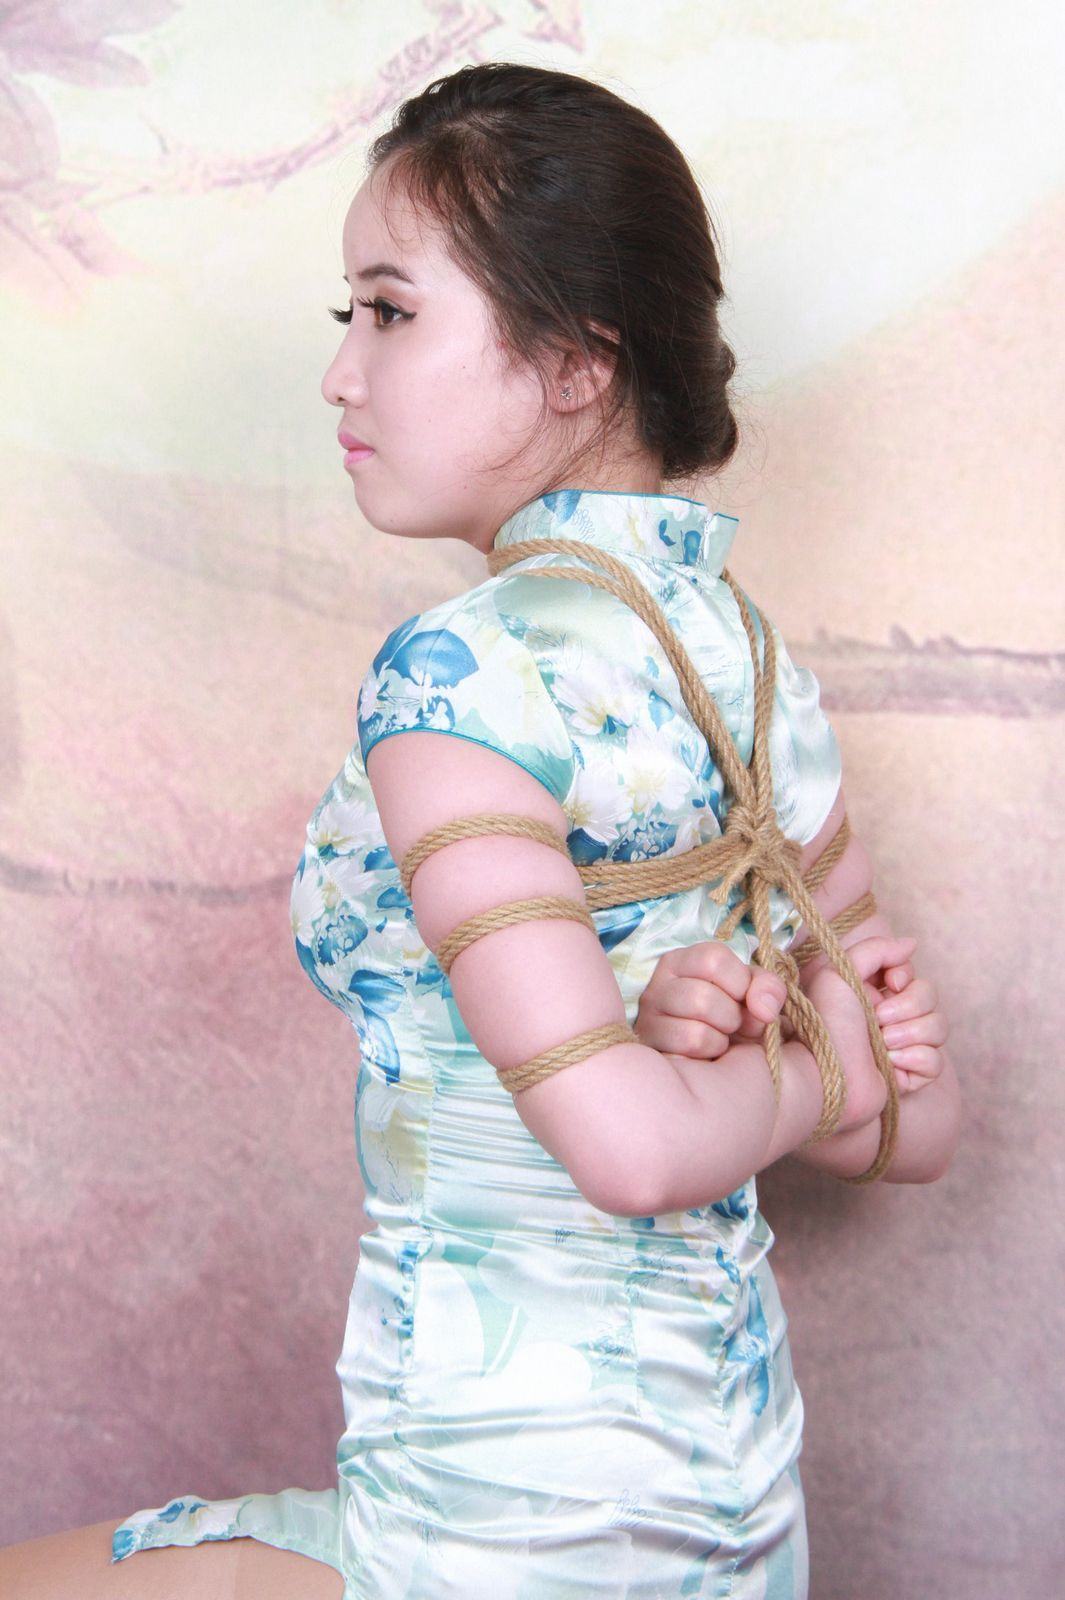 Chinese Slave Girl Training Camp 116